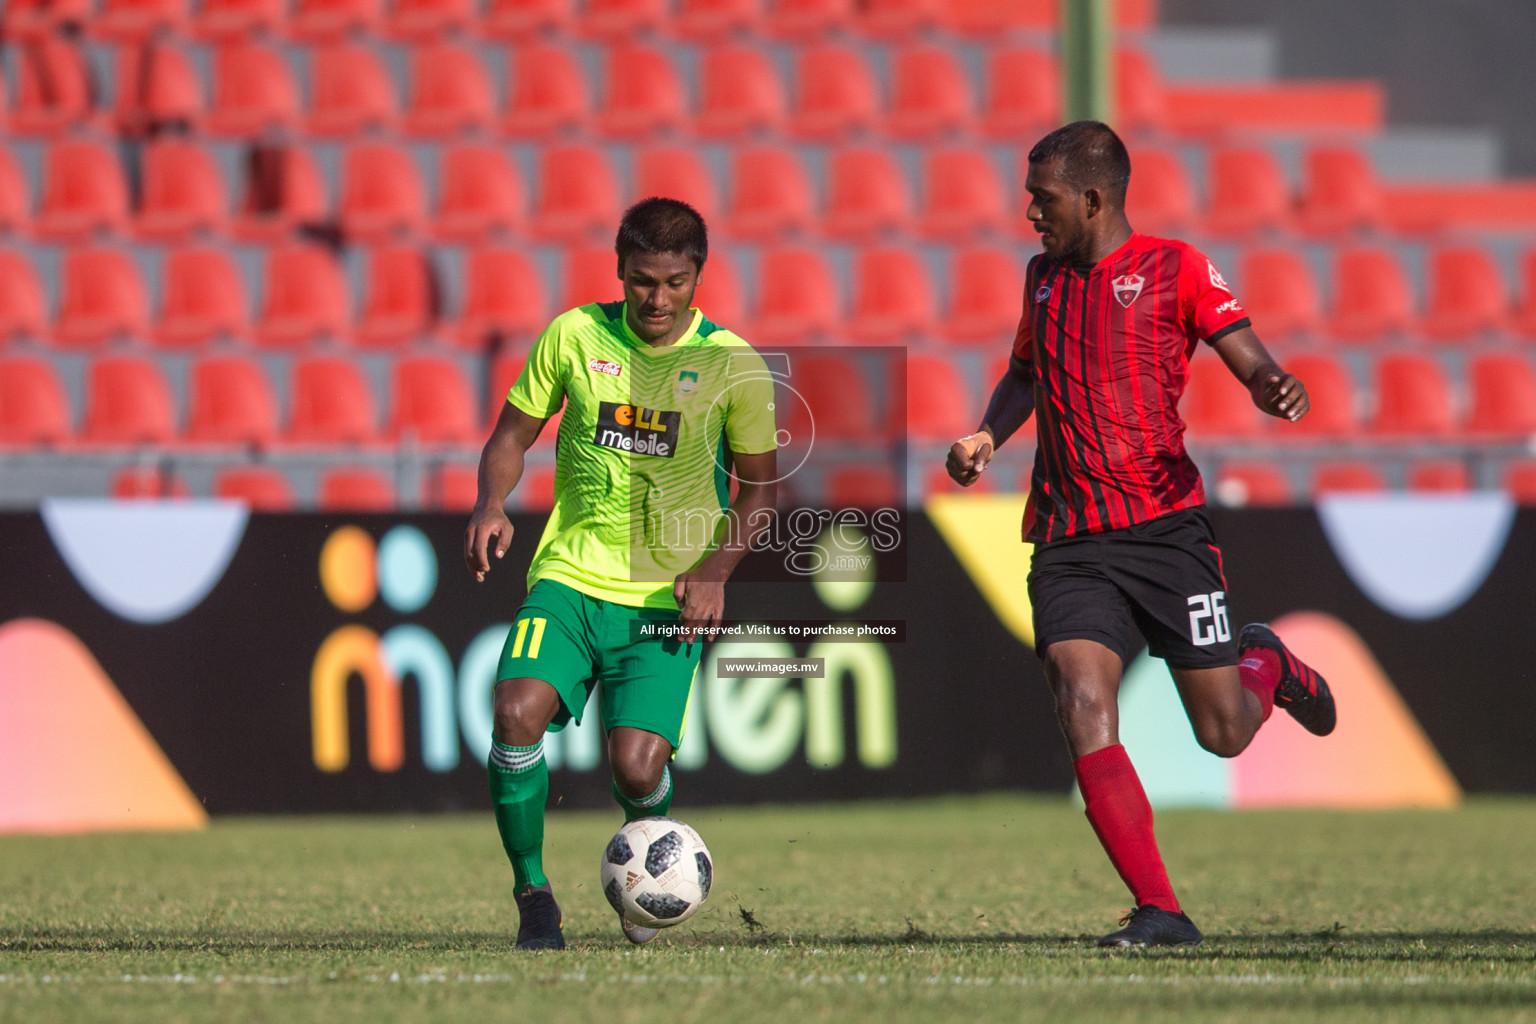 Maziya SR vs TC SC in Dhiraagu Dhivehi Premier League 2019 held in Male', Maldives on 4th July 2019 Photos: Ismail Thoriq/images.mv